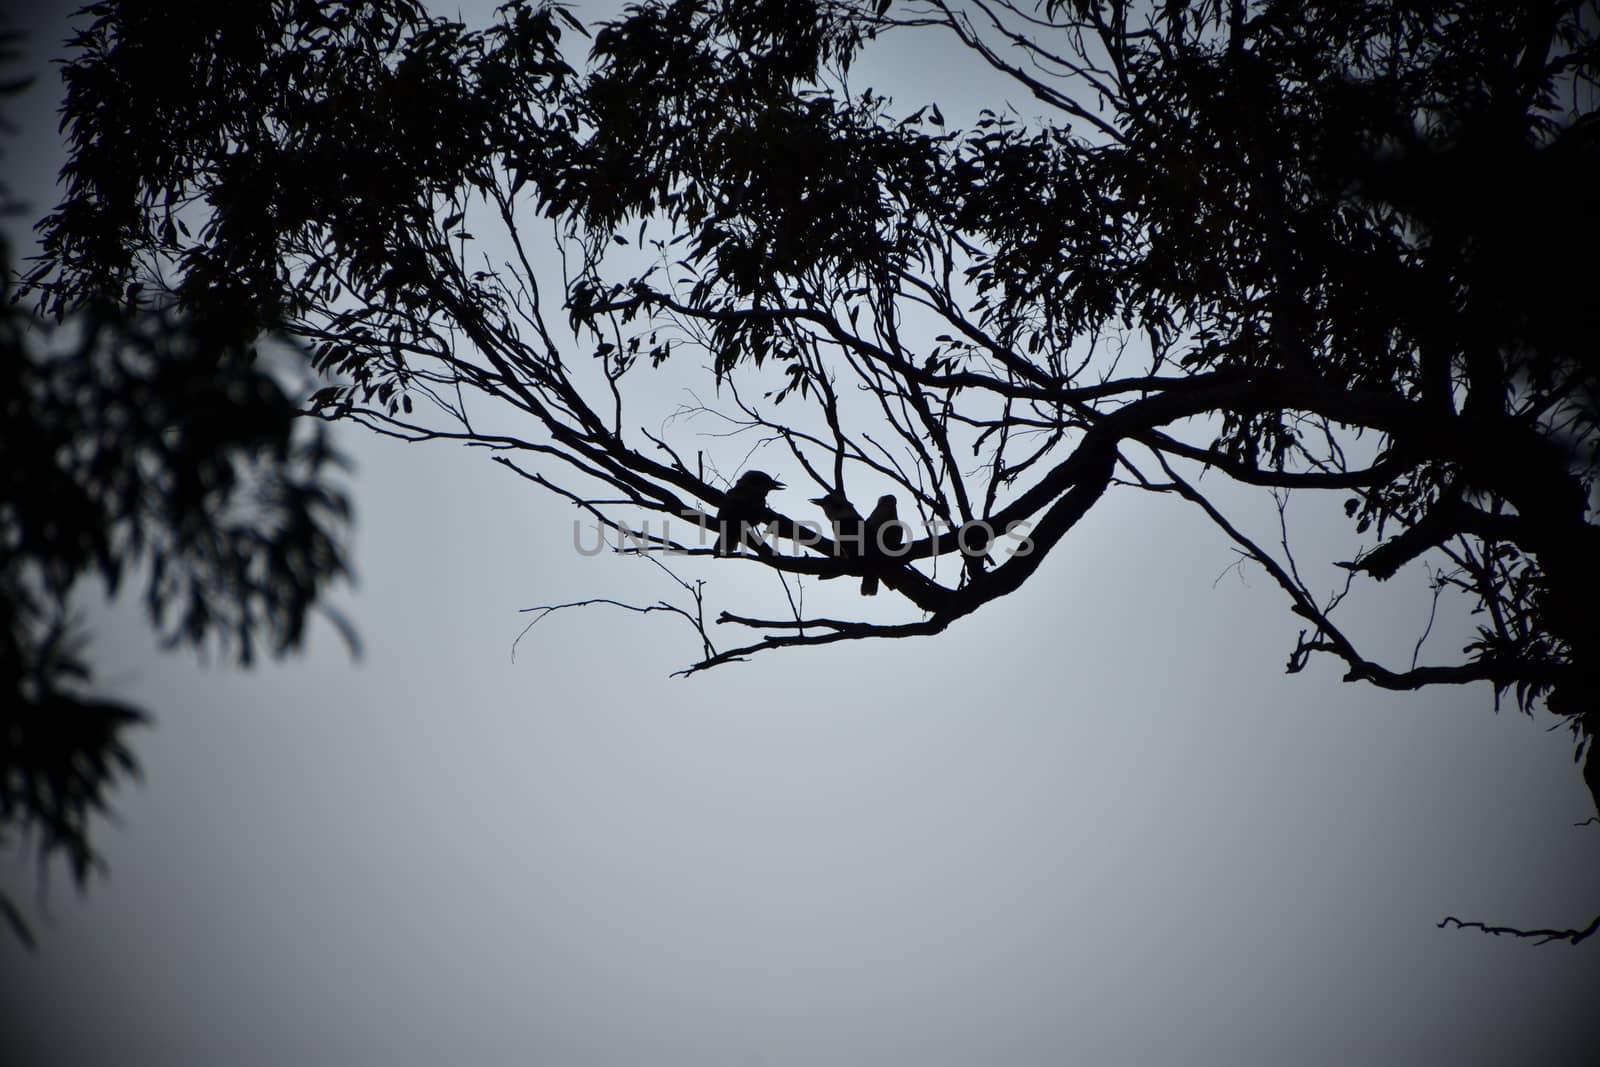 A silhouette of three kookaburras in a tree